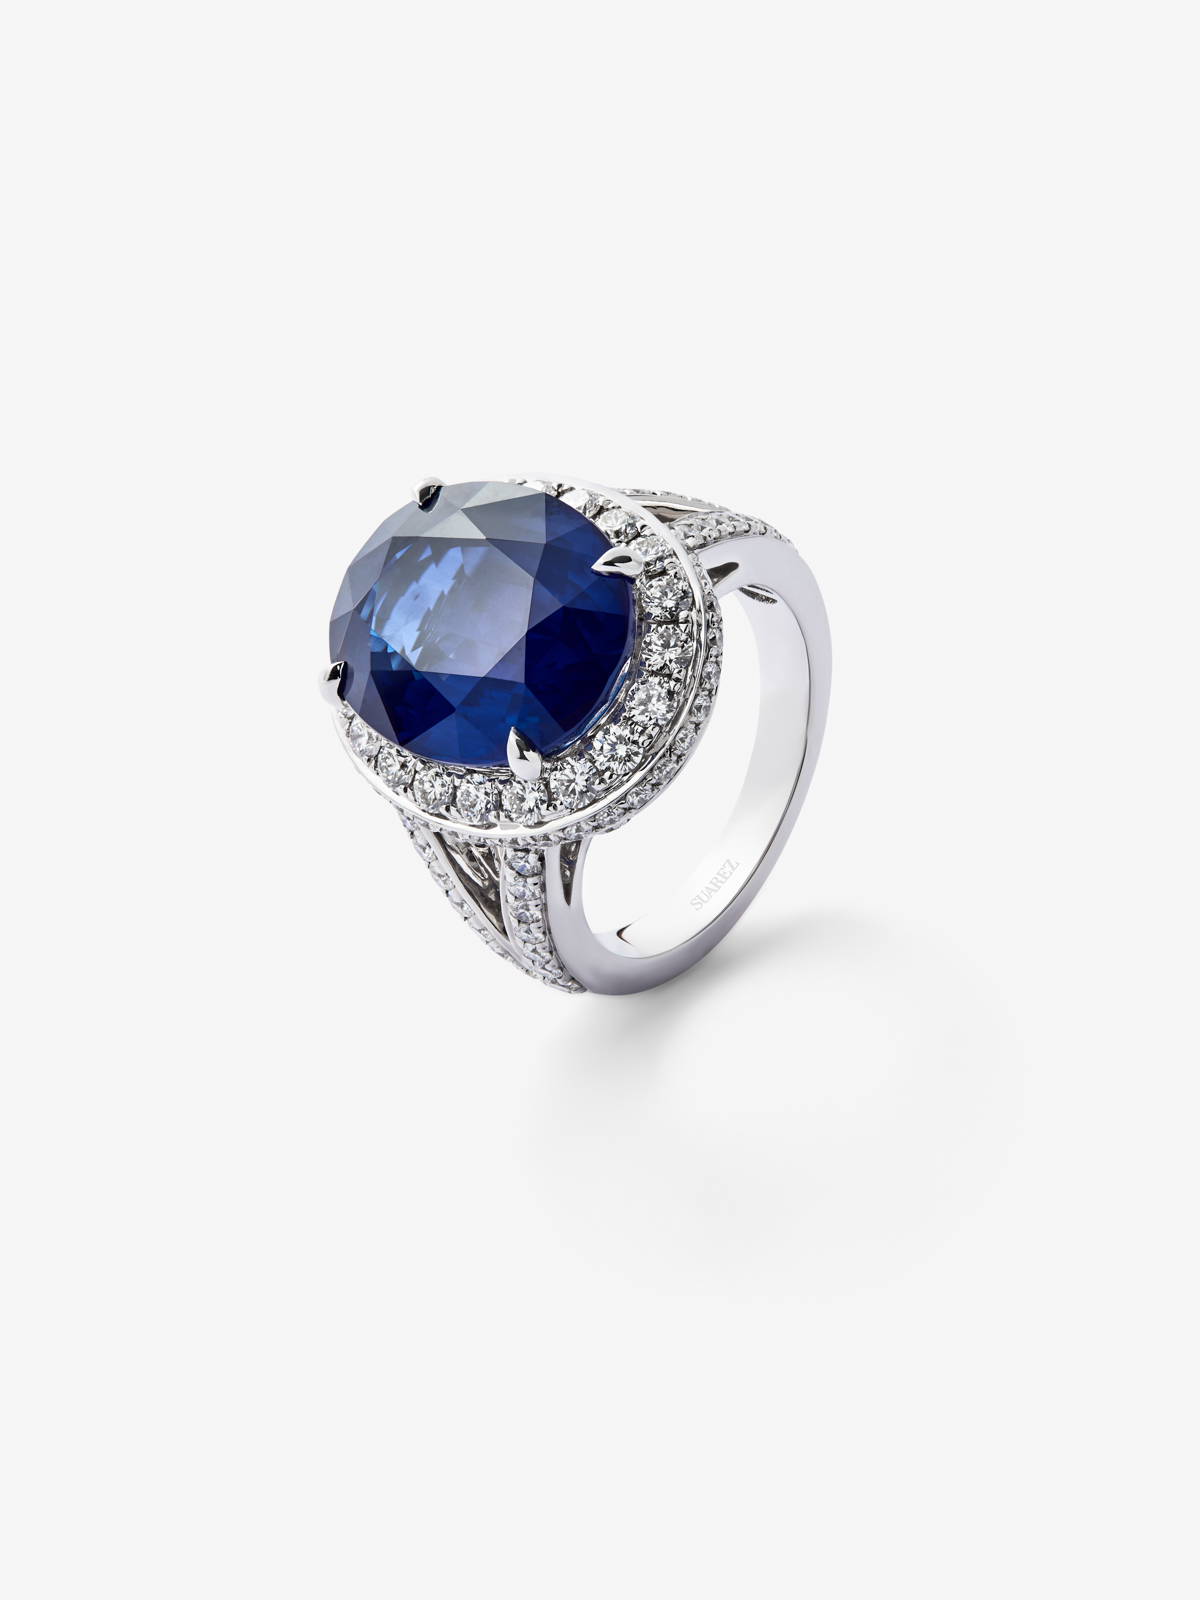 Anillo de oro blanco de 18K con zafiro azul en talla oval de 12,64 cts y diamantes en talla brillante de 1,61 cts